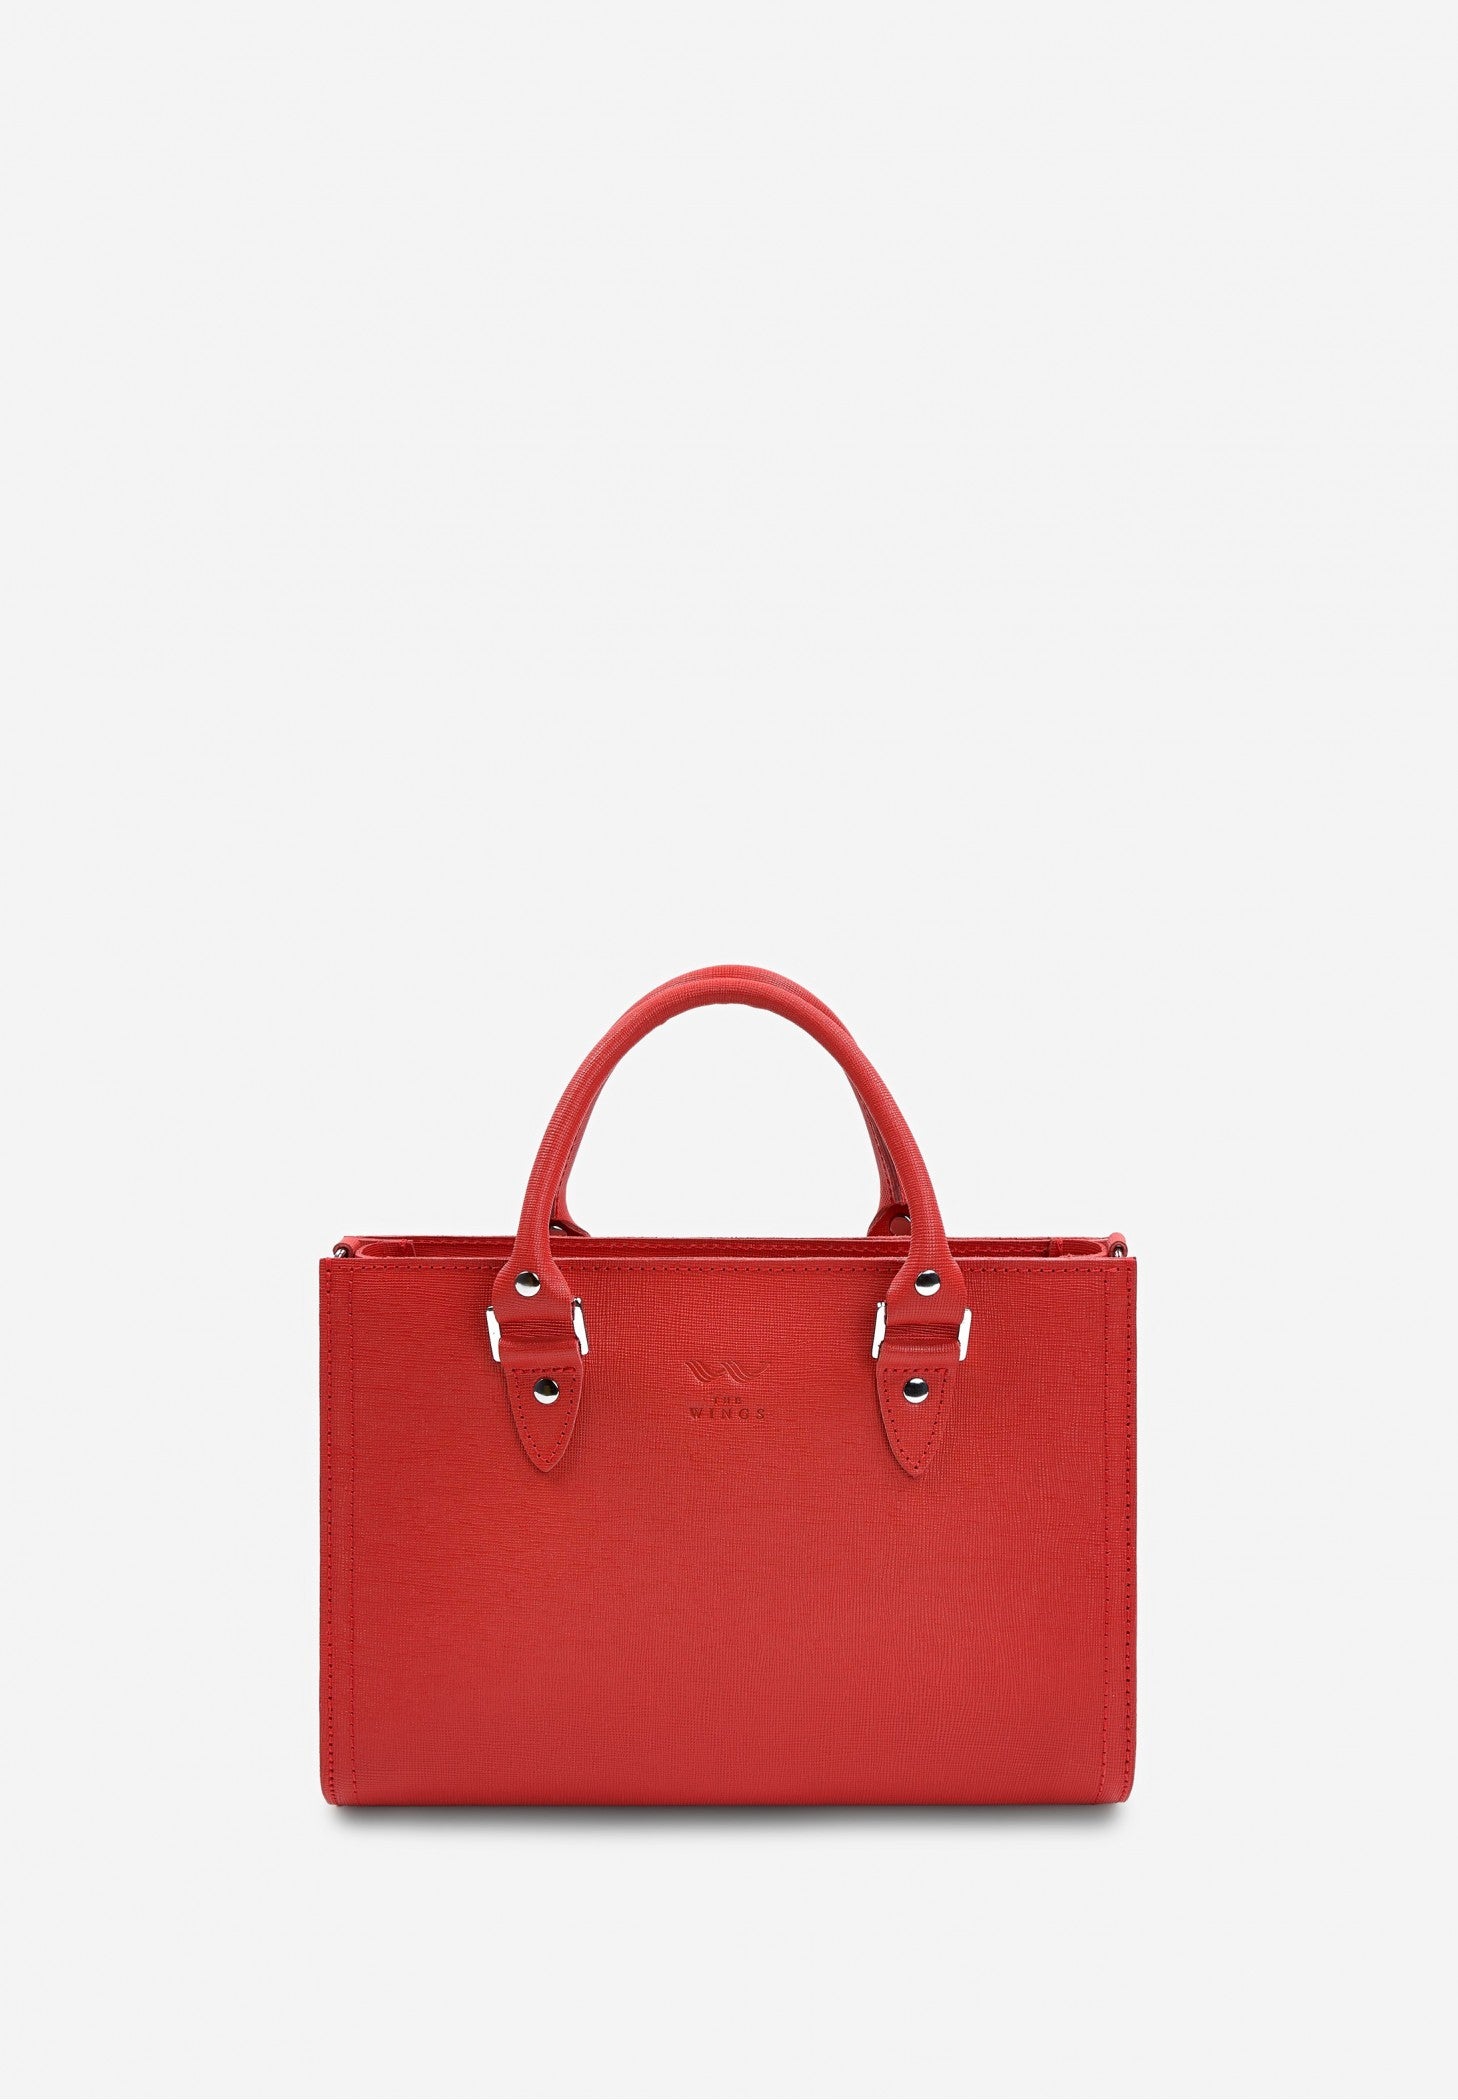 red leather handbag for women